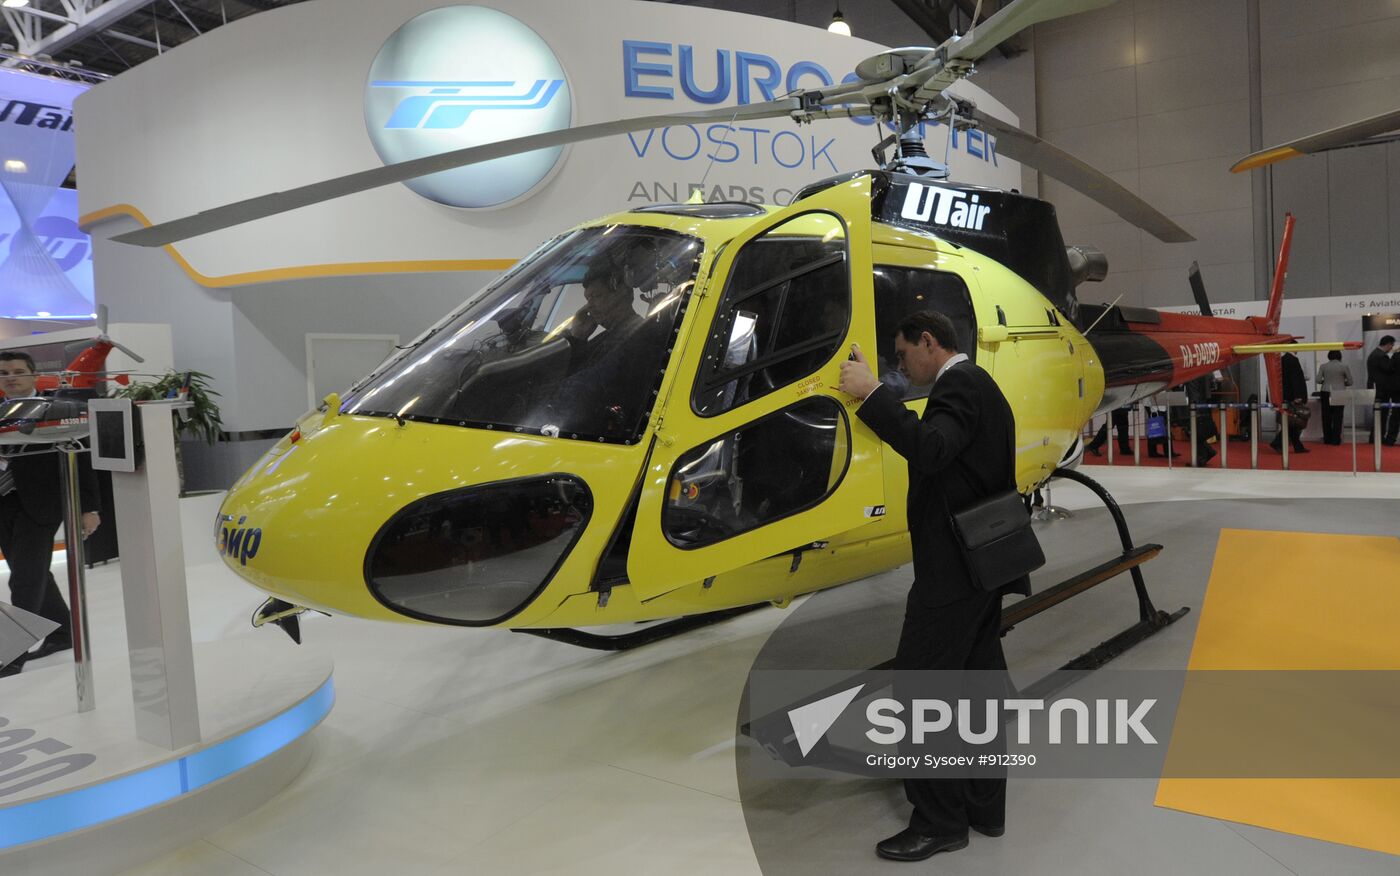 HeliRussia-2011 International helicopter Industry Eexhibition